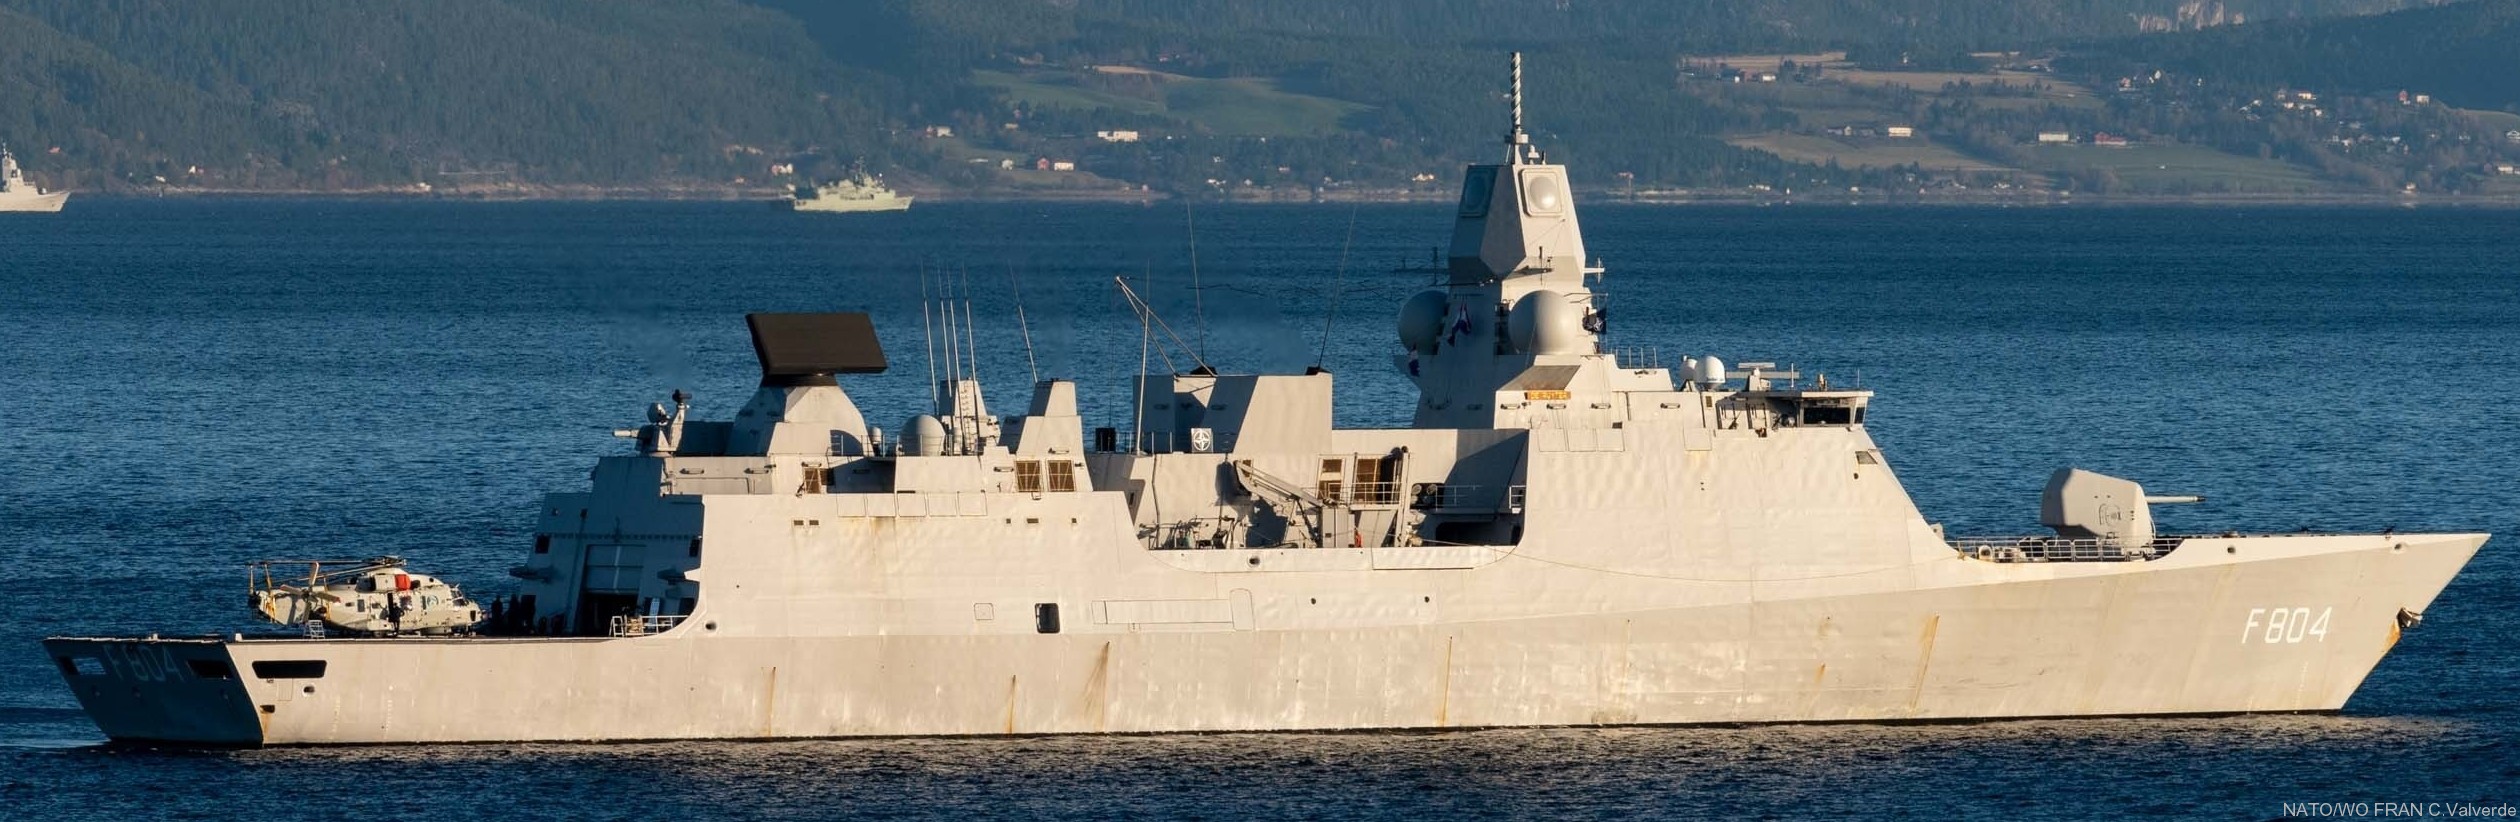 f-804 hnlms de ruyter guided missile frigate ffg lcf royal netherlands navy 16